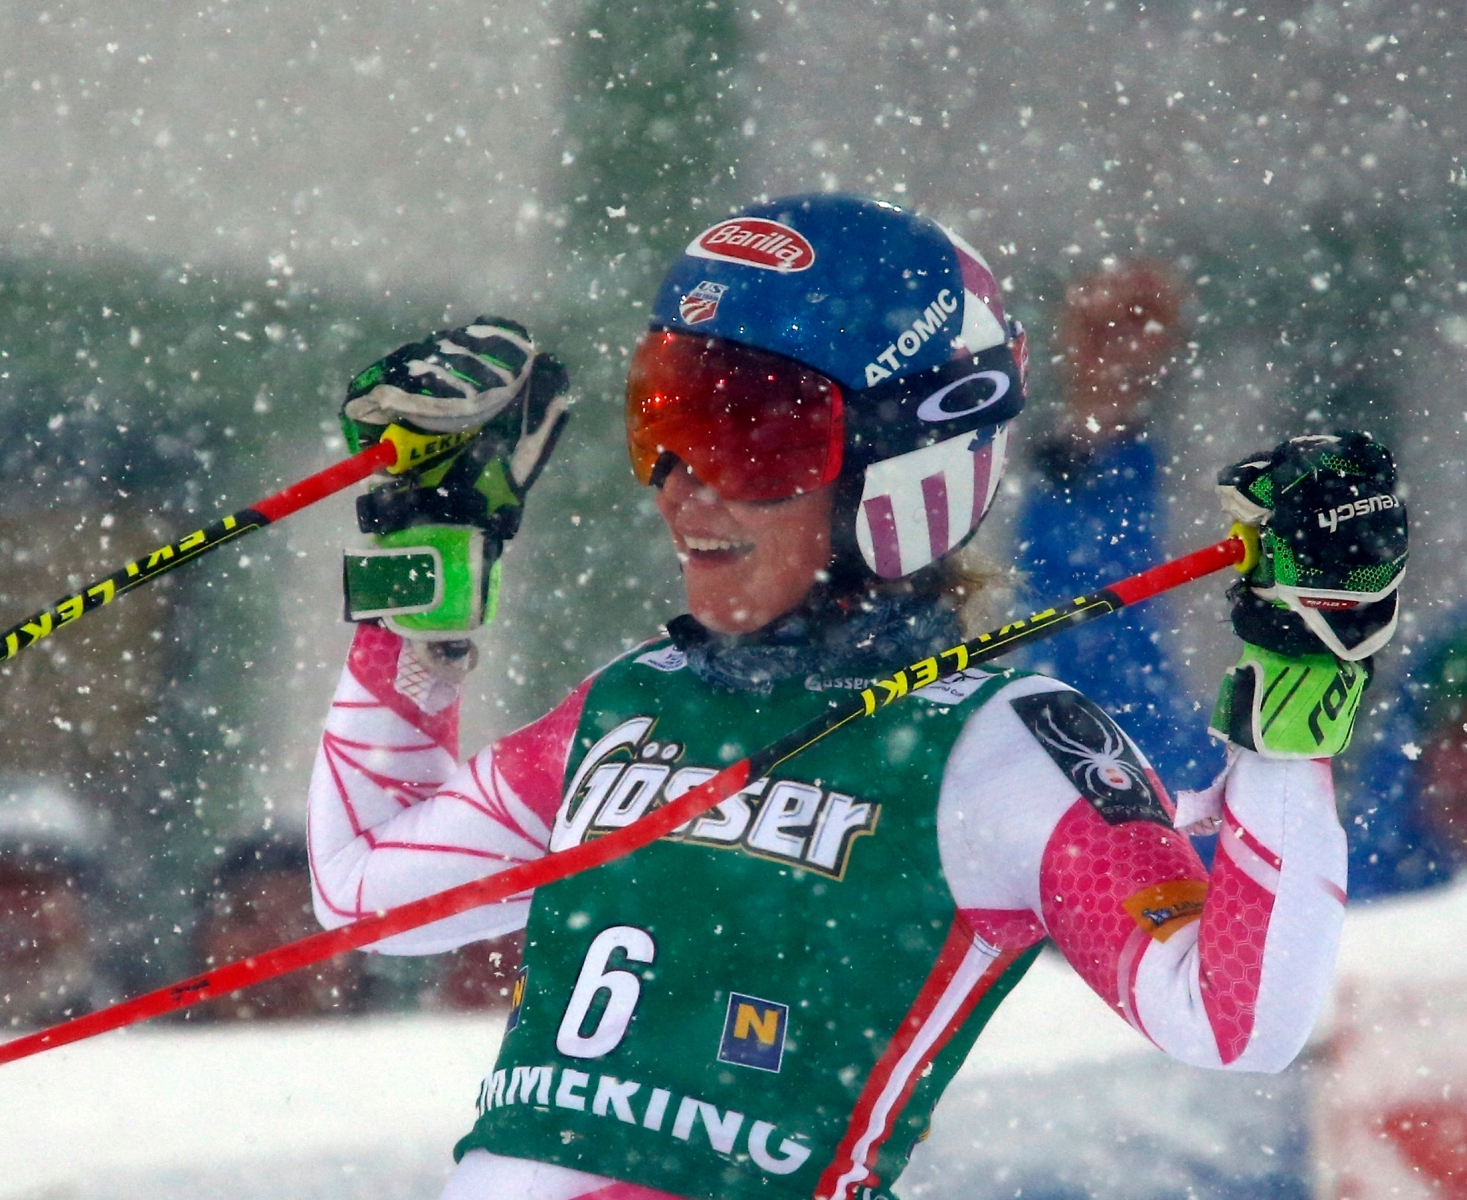 United States's Mikaela Shiffrin celebrates after winning an alpine ski, women's World Cup Giant Slalom, in Semmering, Austria, Wednesday, Dec. 28, 2016. (AP Photo/Giovanni Auletta) Austria Alpine Skiing World Cup